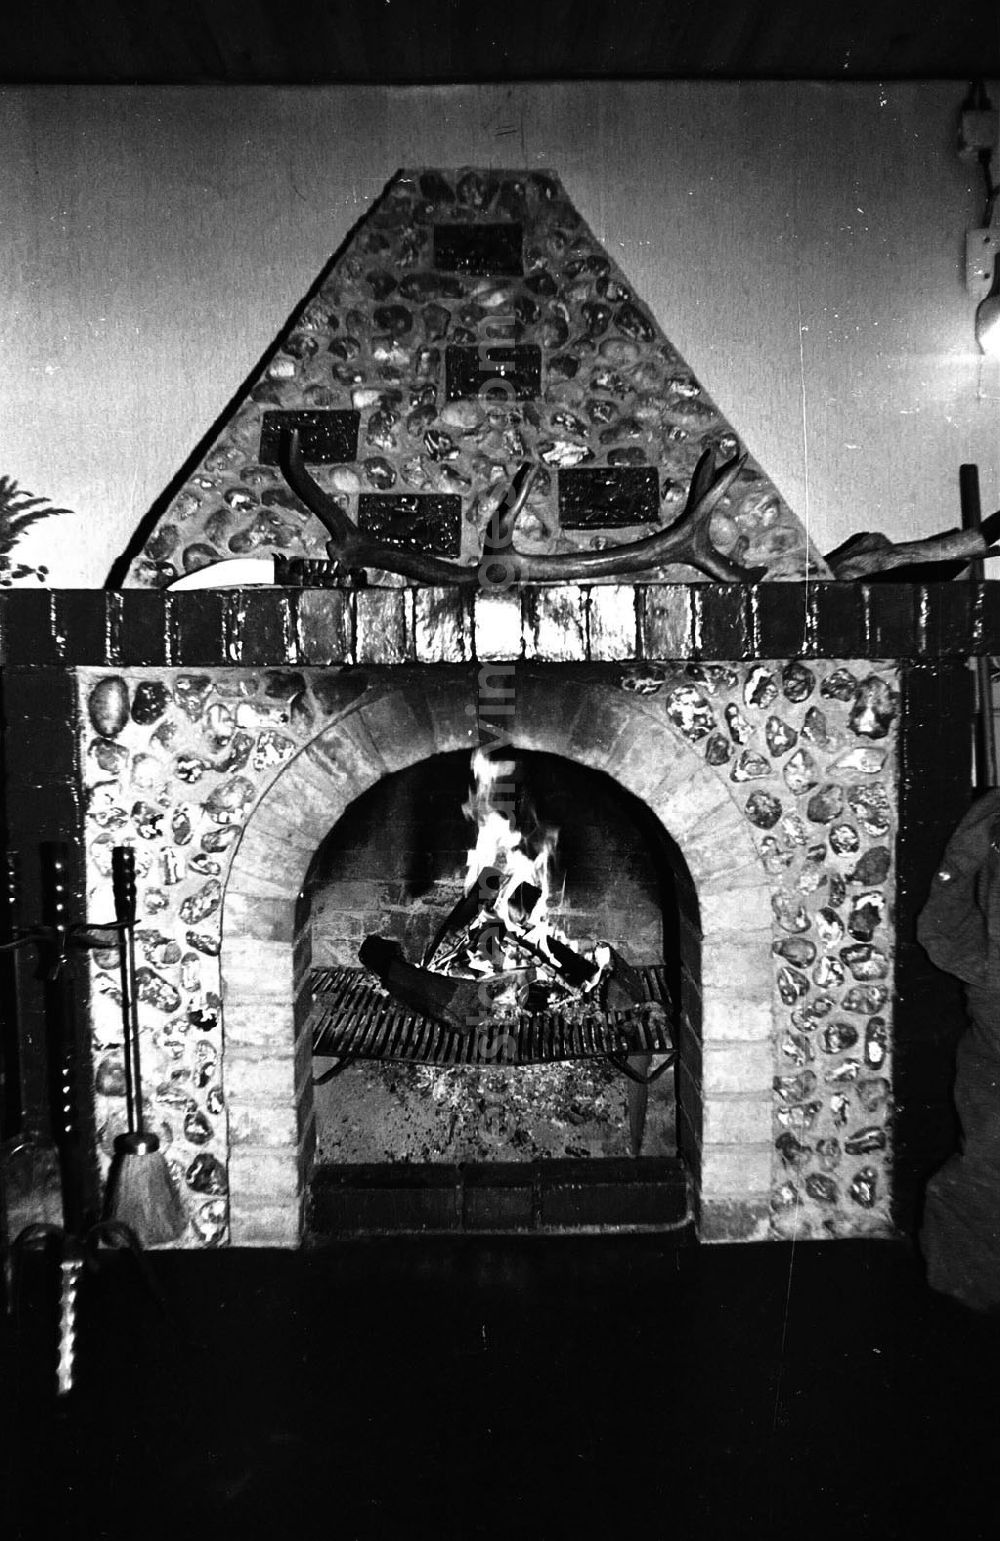 Karlshagen (Mecklenburg-Vorpommern): Januar 1985 Verabschiedung Oberstleutnant Gourklovits Feier in einer Jagdhütte in Karlshagen (Mecklenburg-Vorpommern) - Kamin